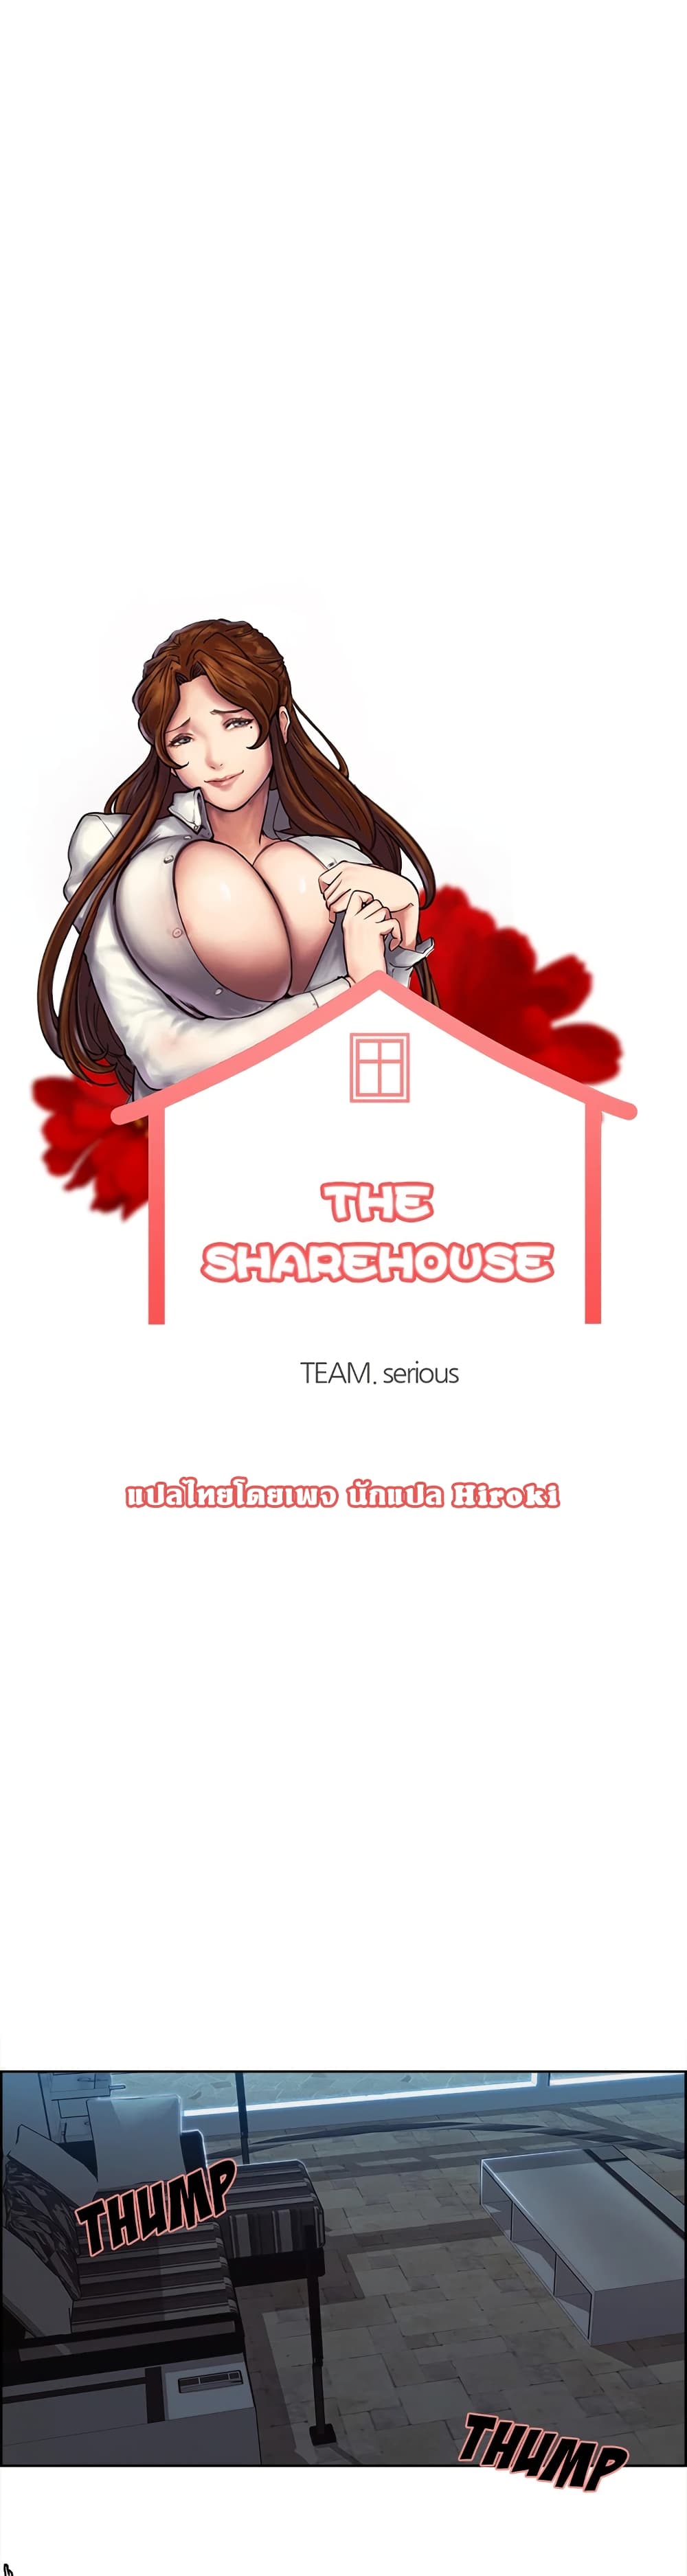 The Sharehouse 36 (1)